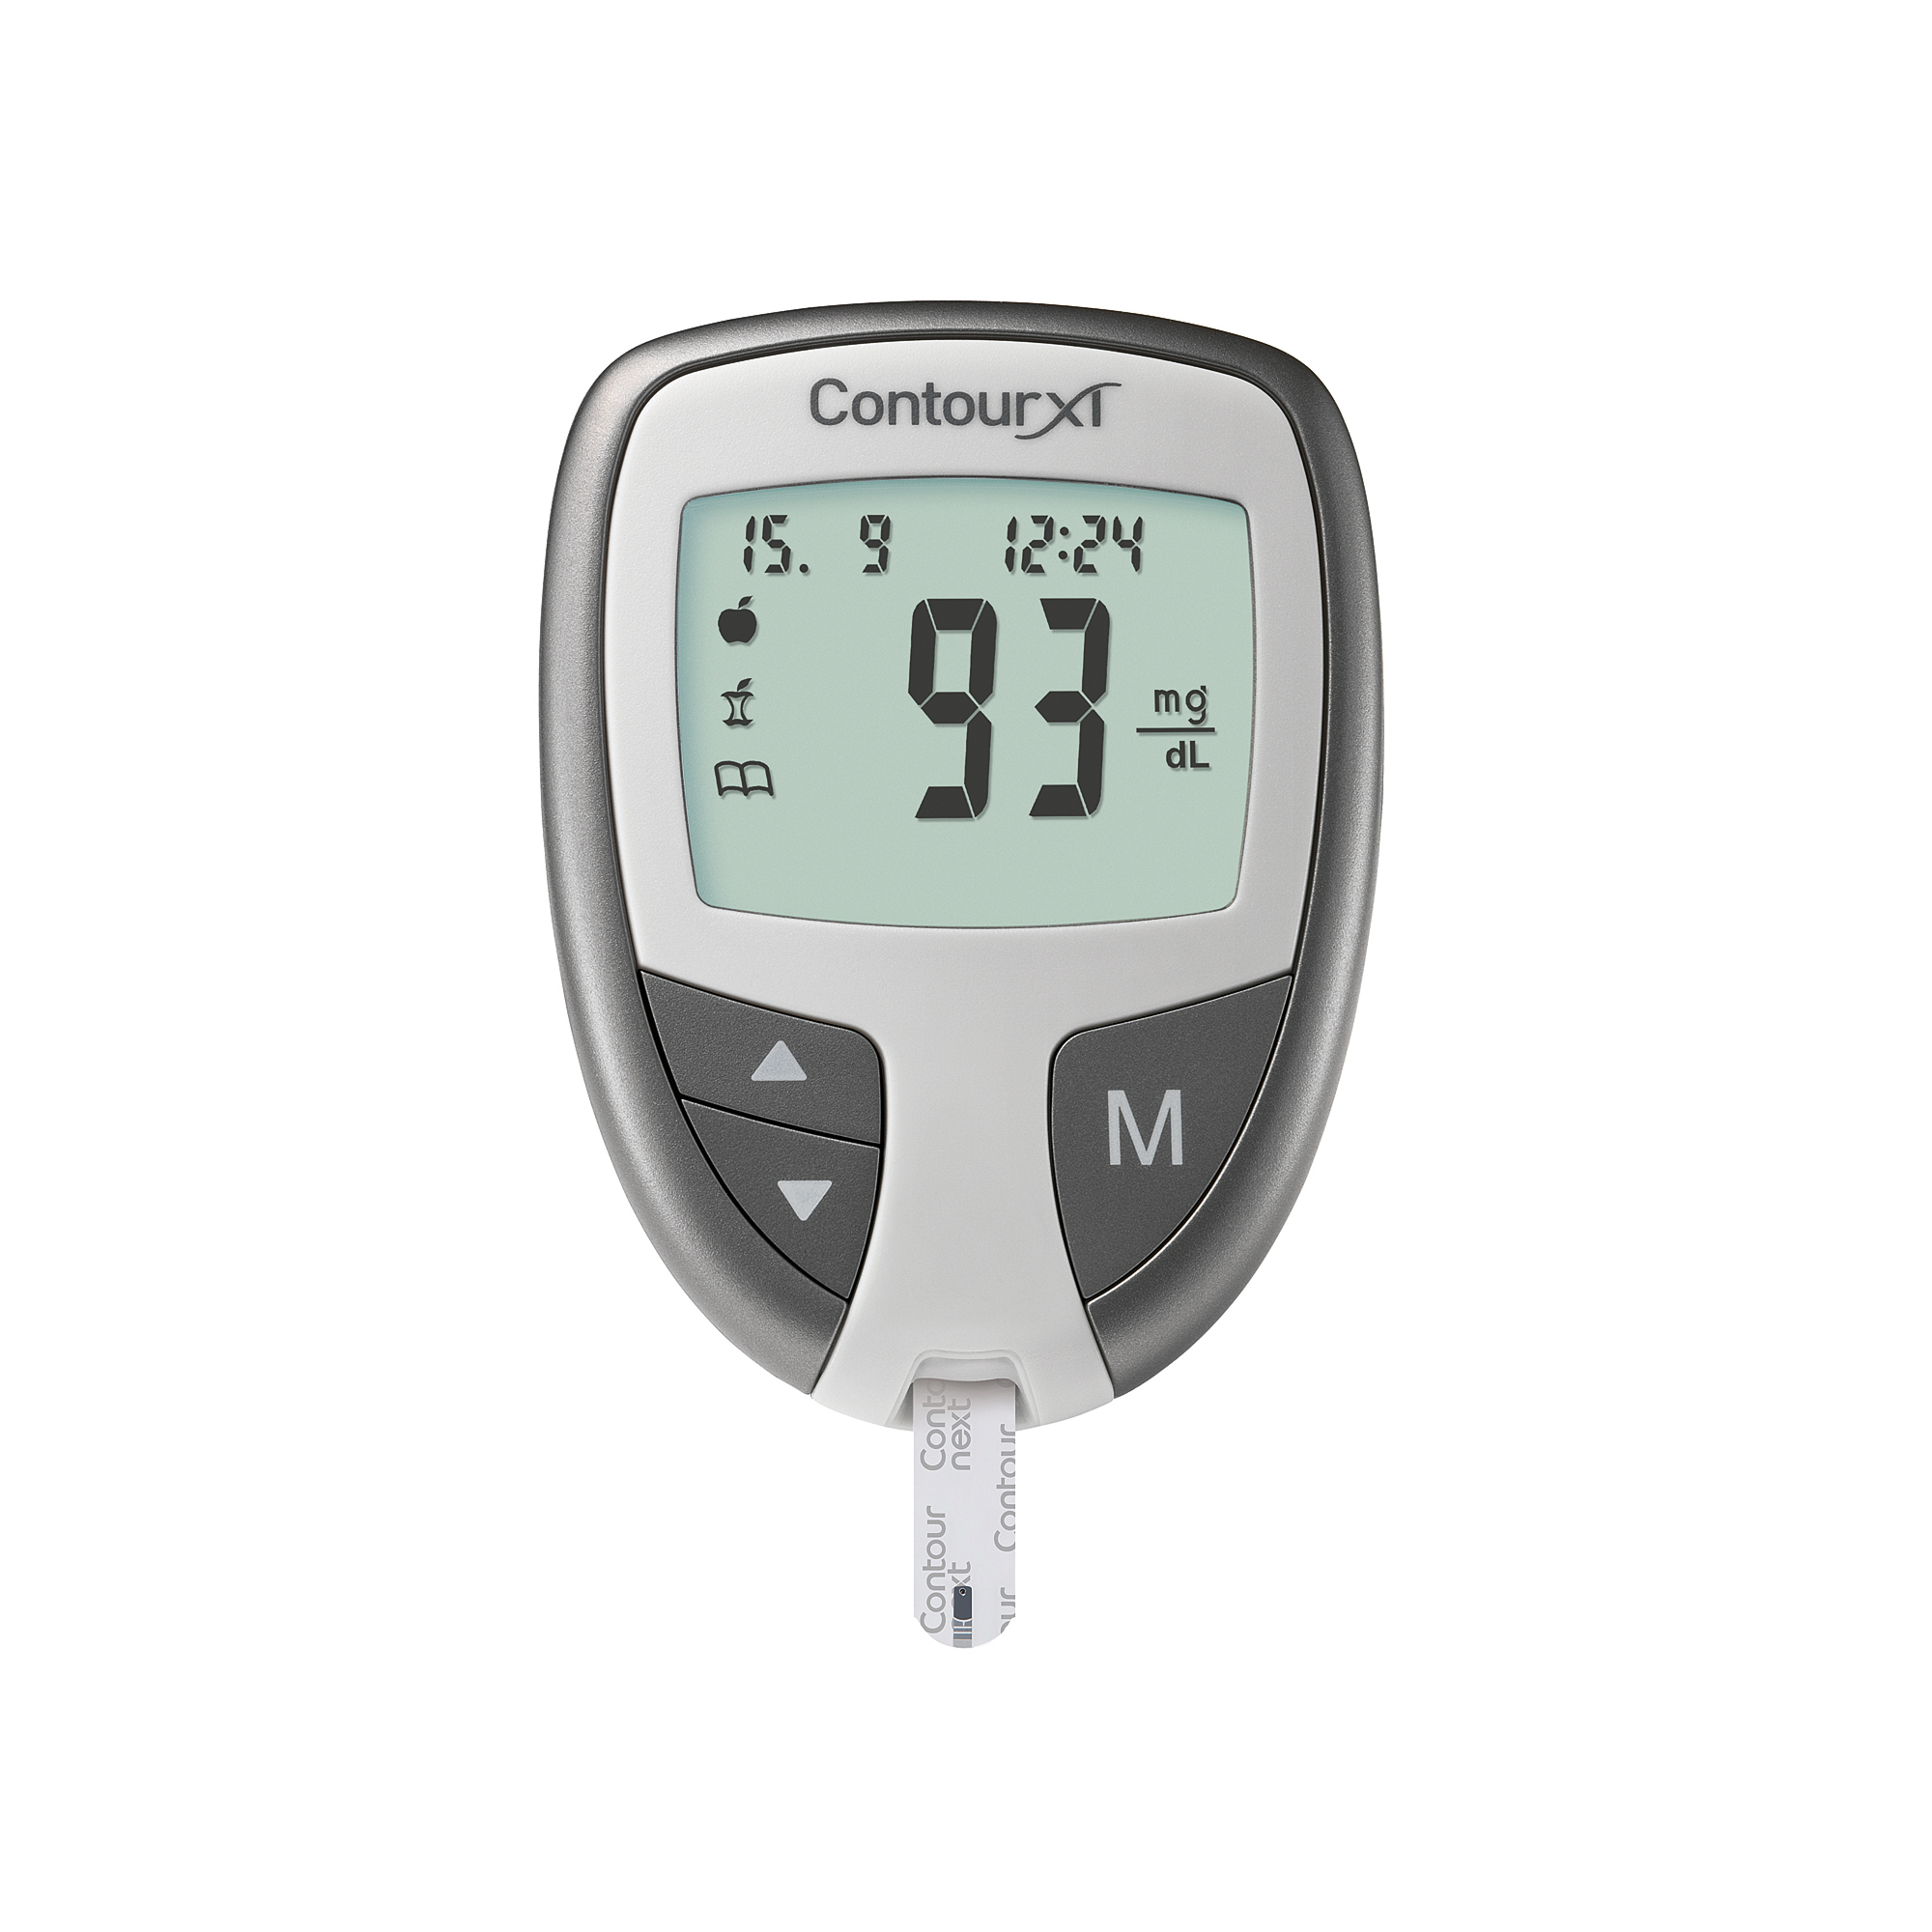 Bayer blood glucose meter CONTOUR® XT, large display, mmol/l, 1 Set